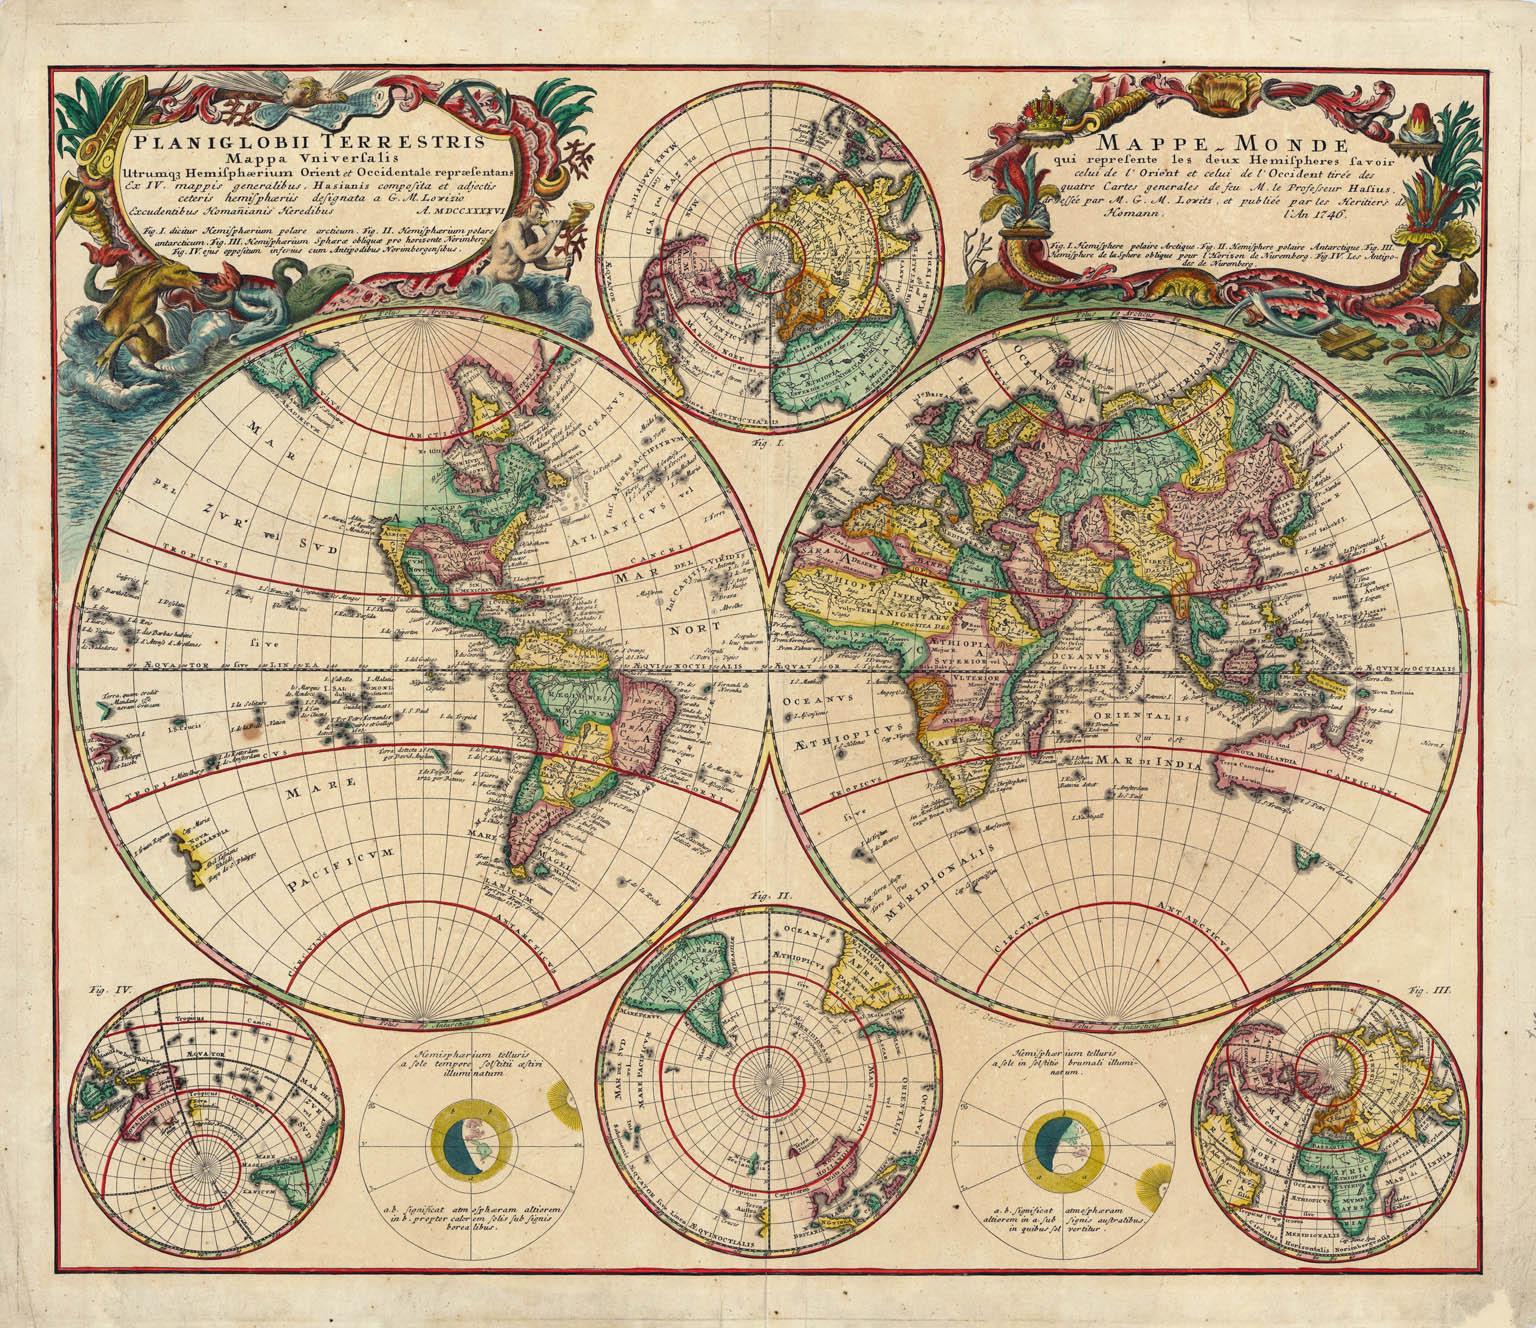 Homann Heirs Print - Planiglobii Terrestris Mappa Universalis / Mappe Monde